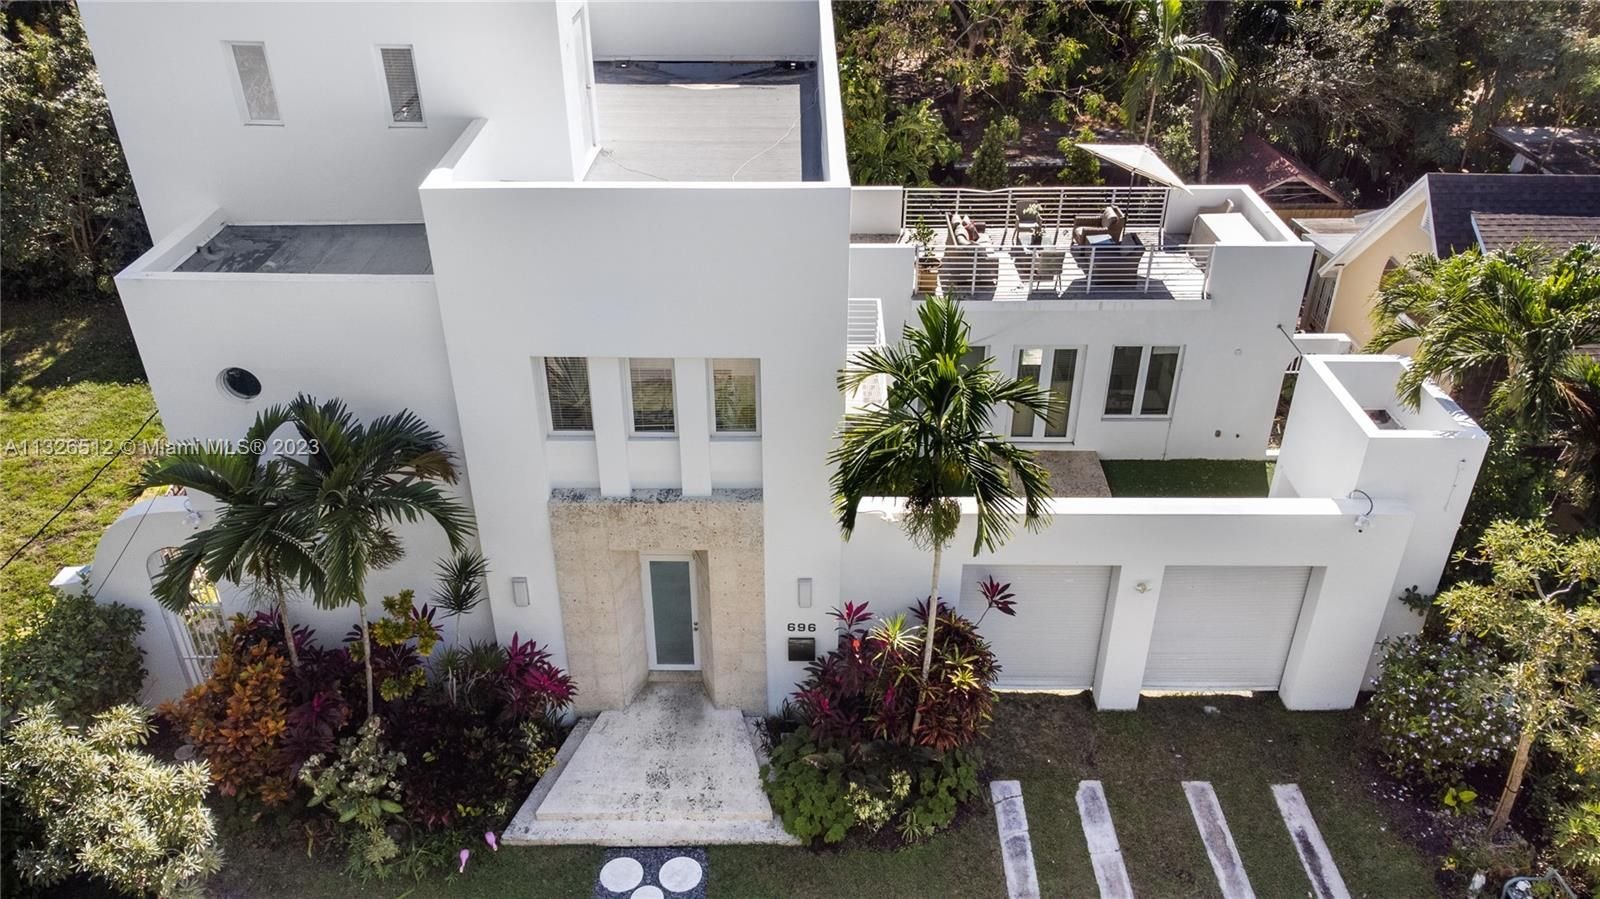 Real estate property located at 696 68th St, Miami-Dade County, Miami, FL